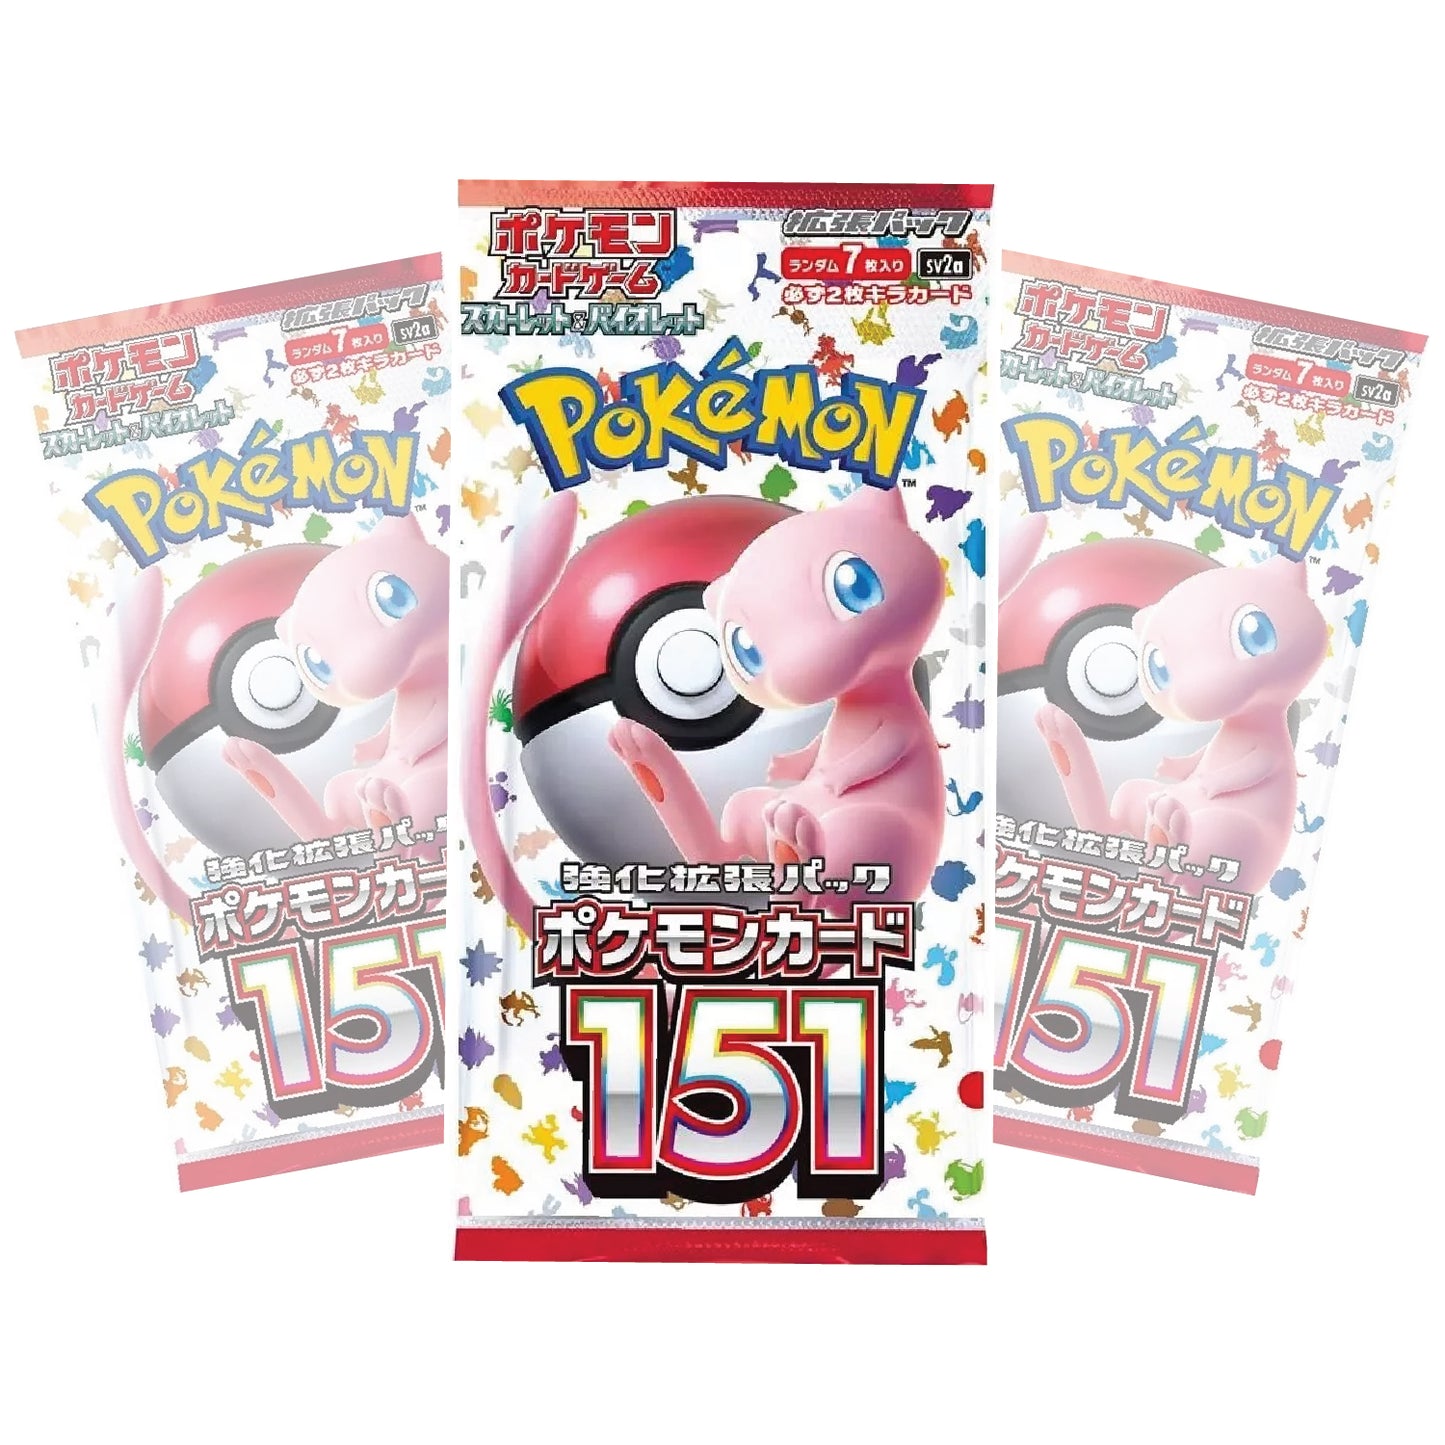 Pokémon TCG | Japanese Expansion: Pokémon 151 - Booster Box (20 Booster Packs)